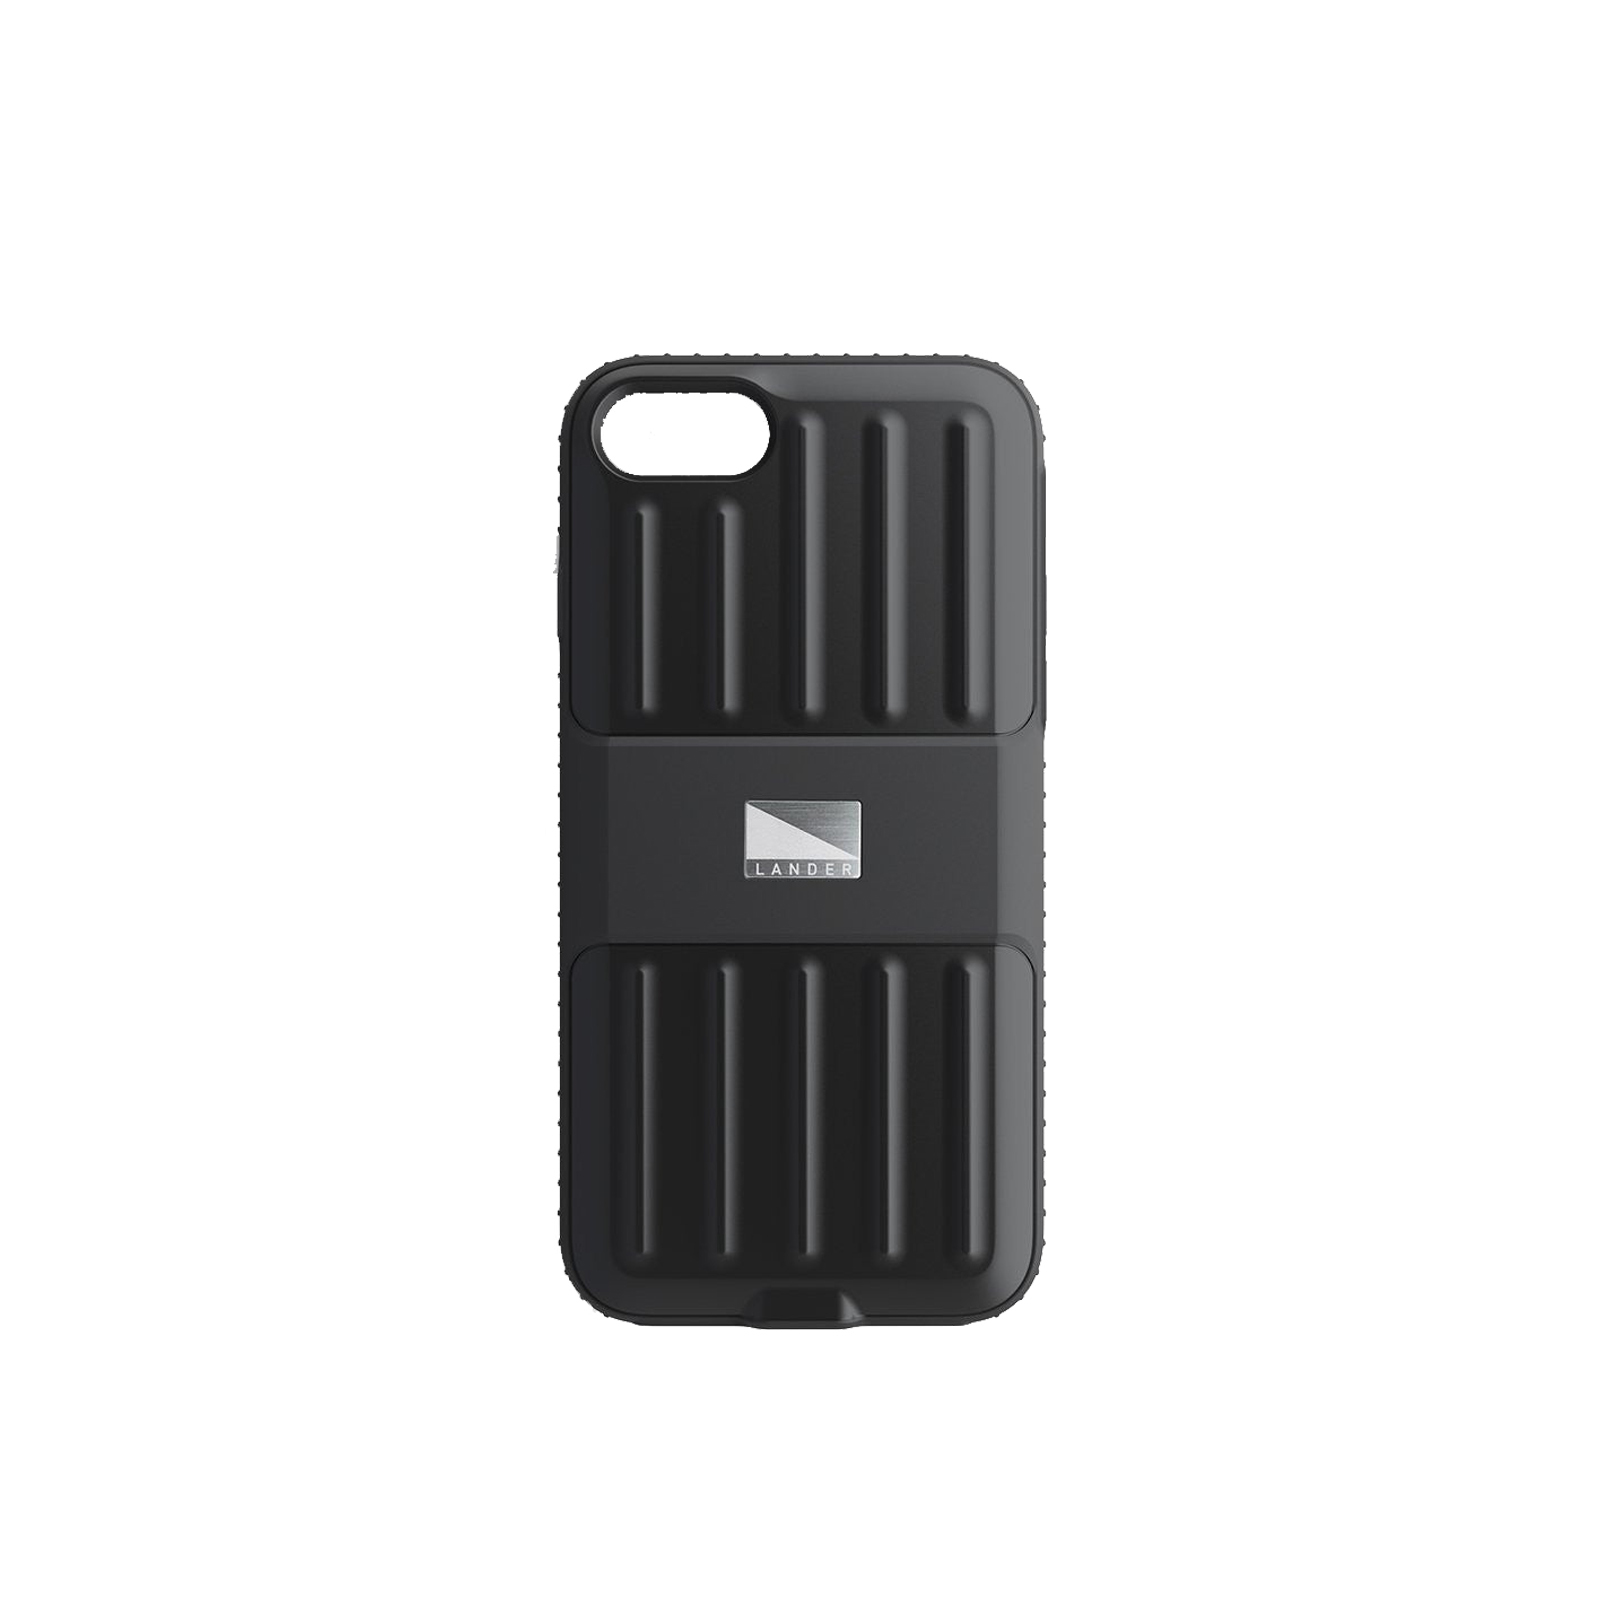 Powell iPhone 7 / 8 Case [Black]